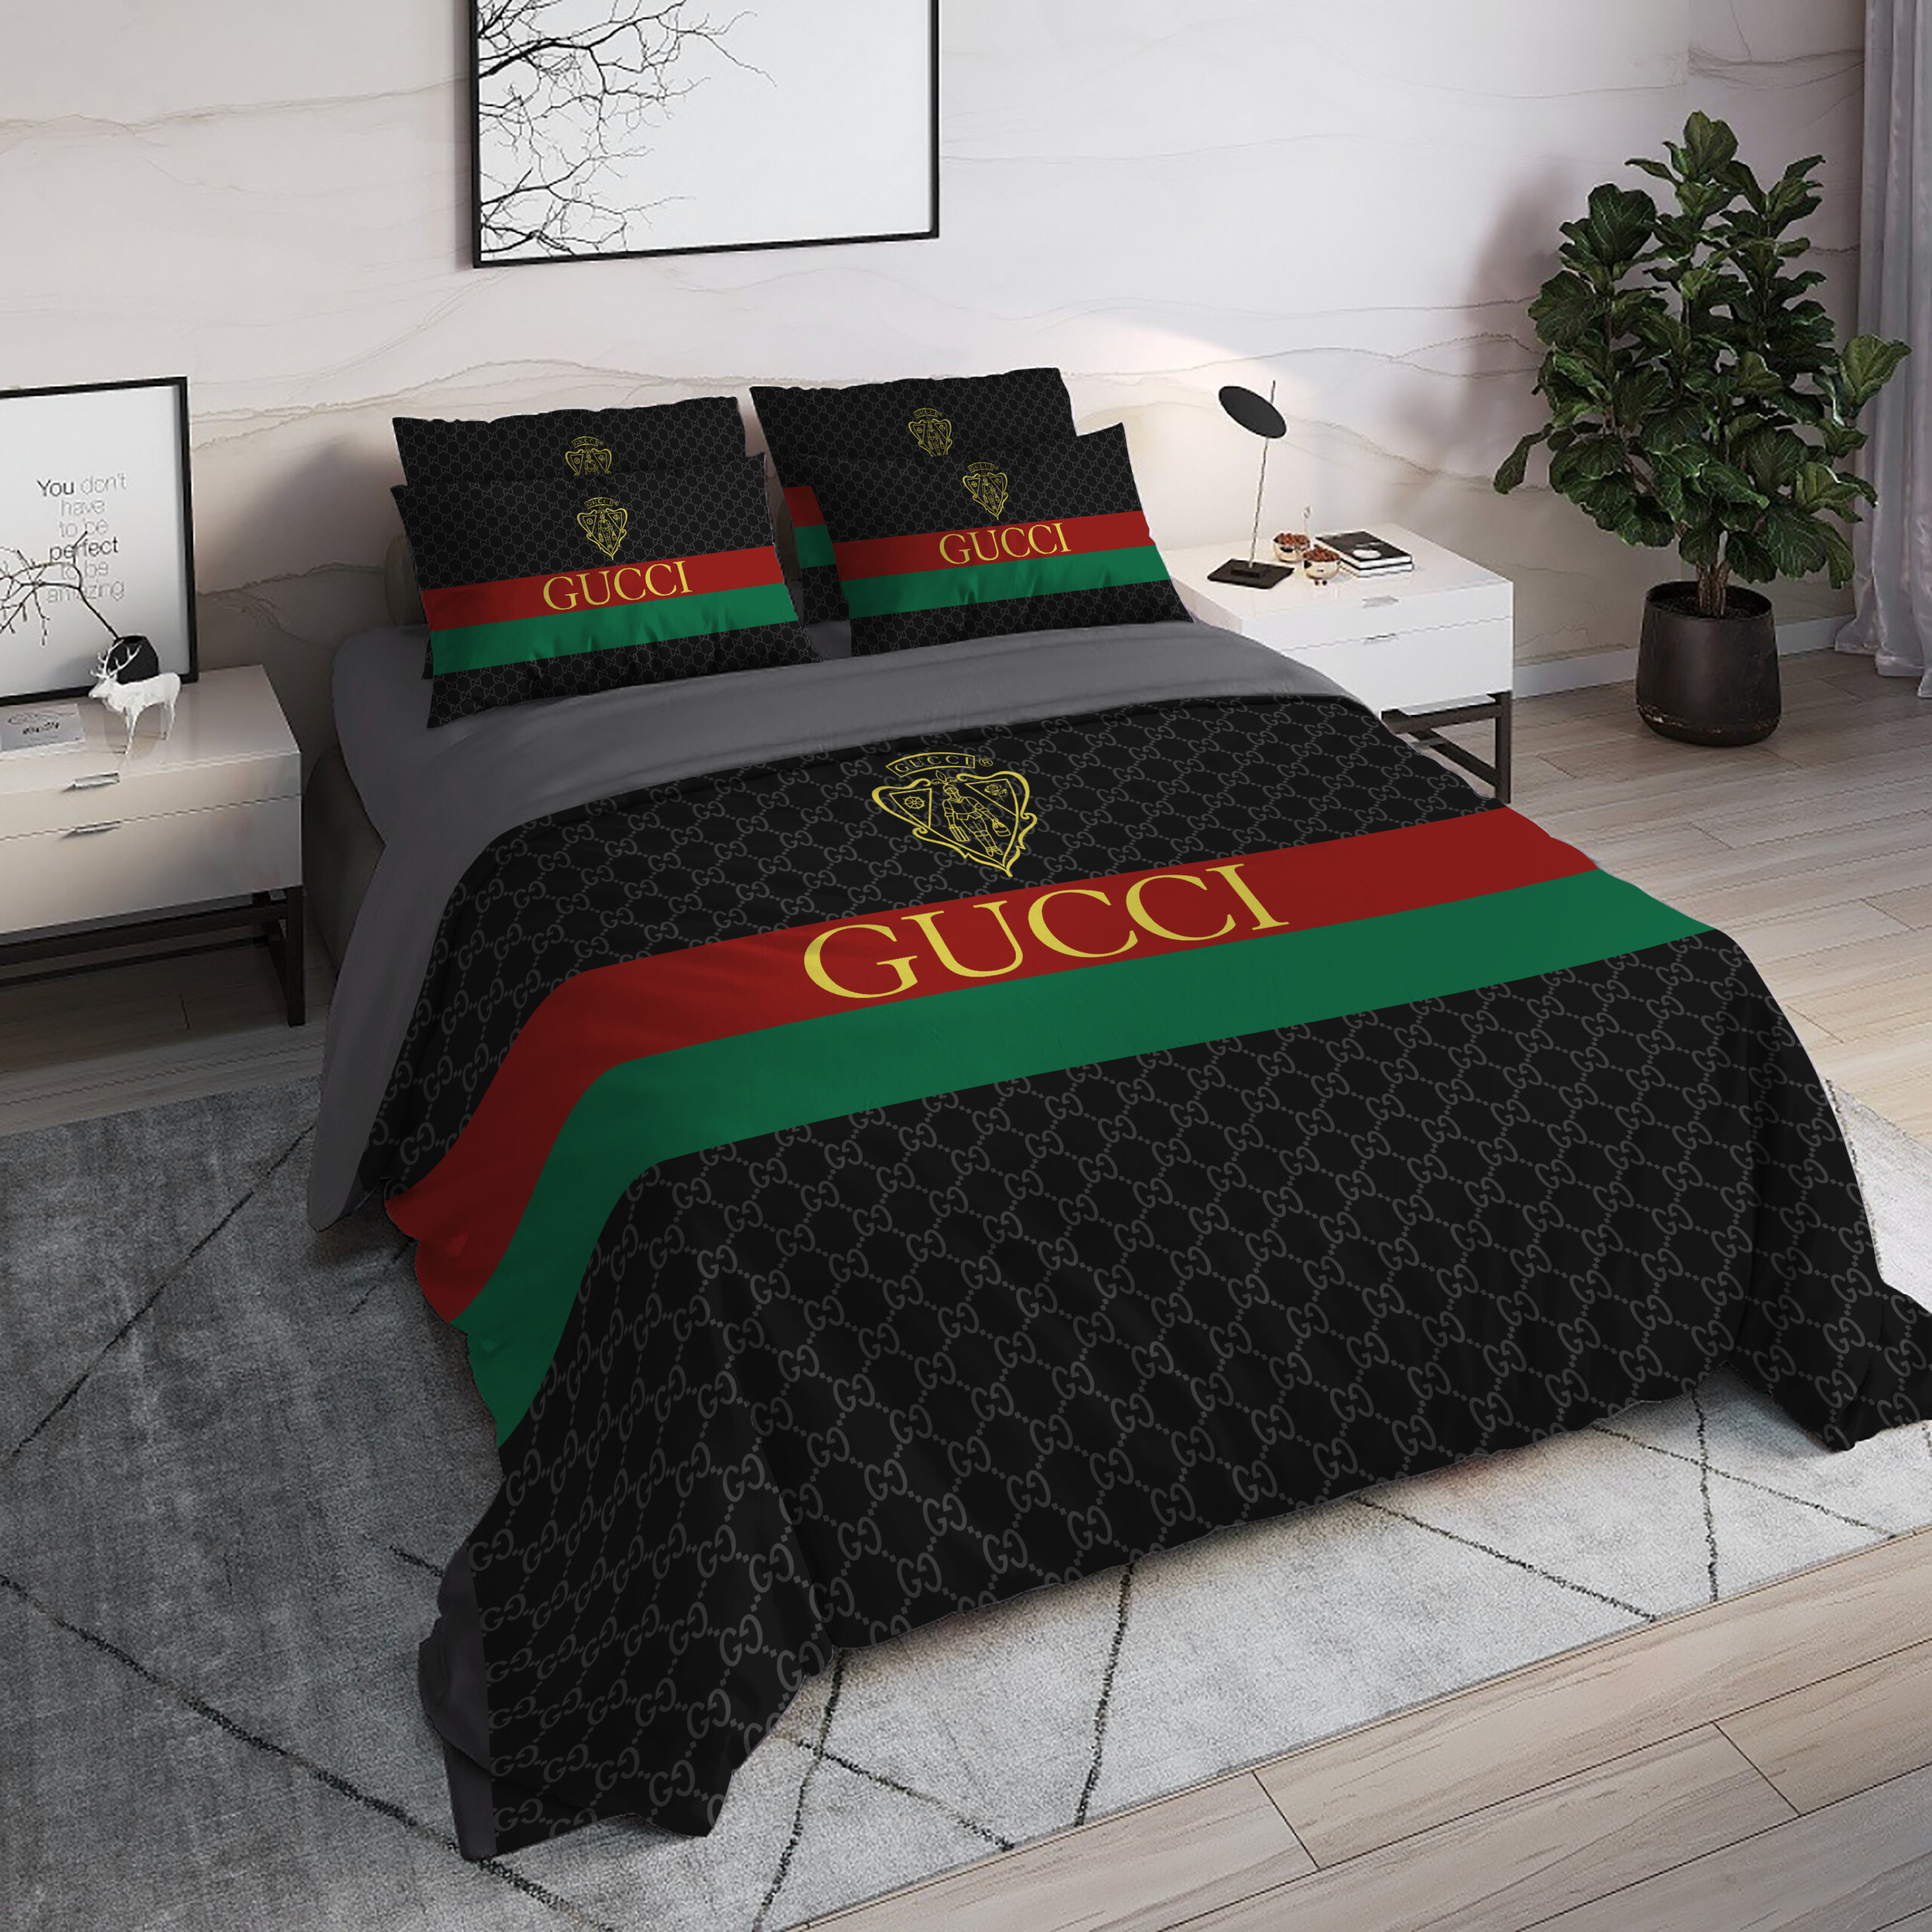 Gucci Bedding Sets 03